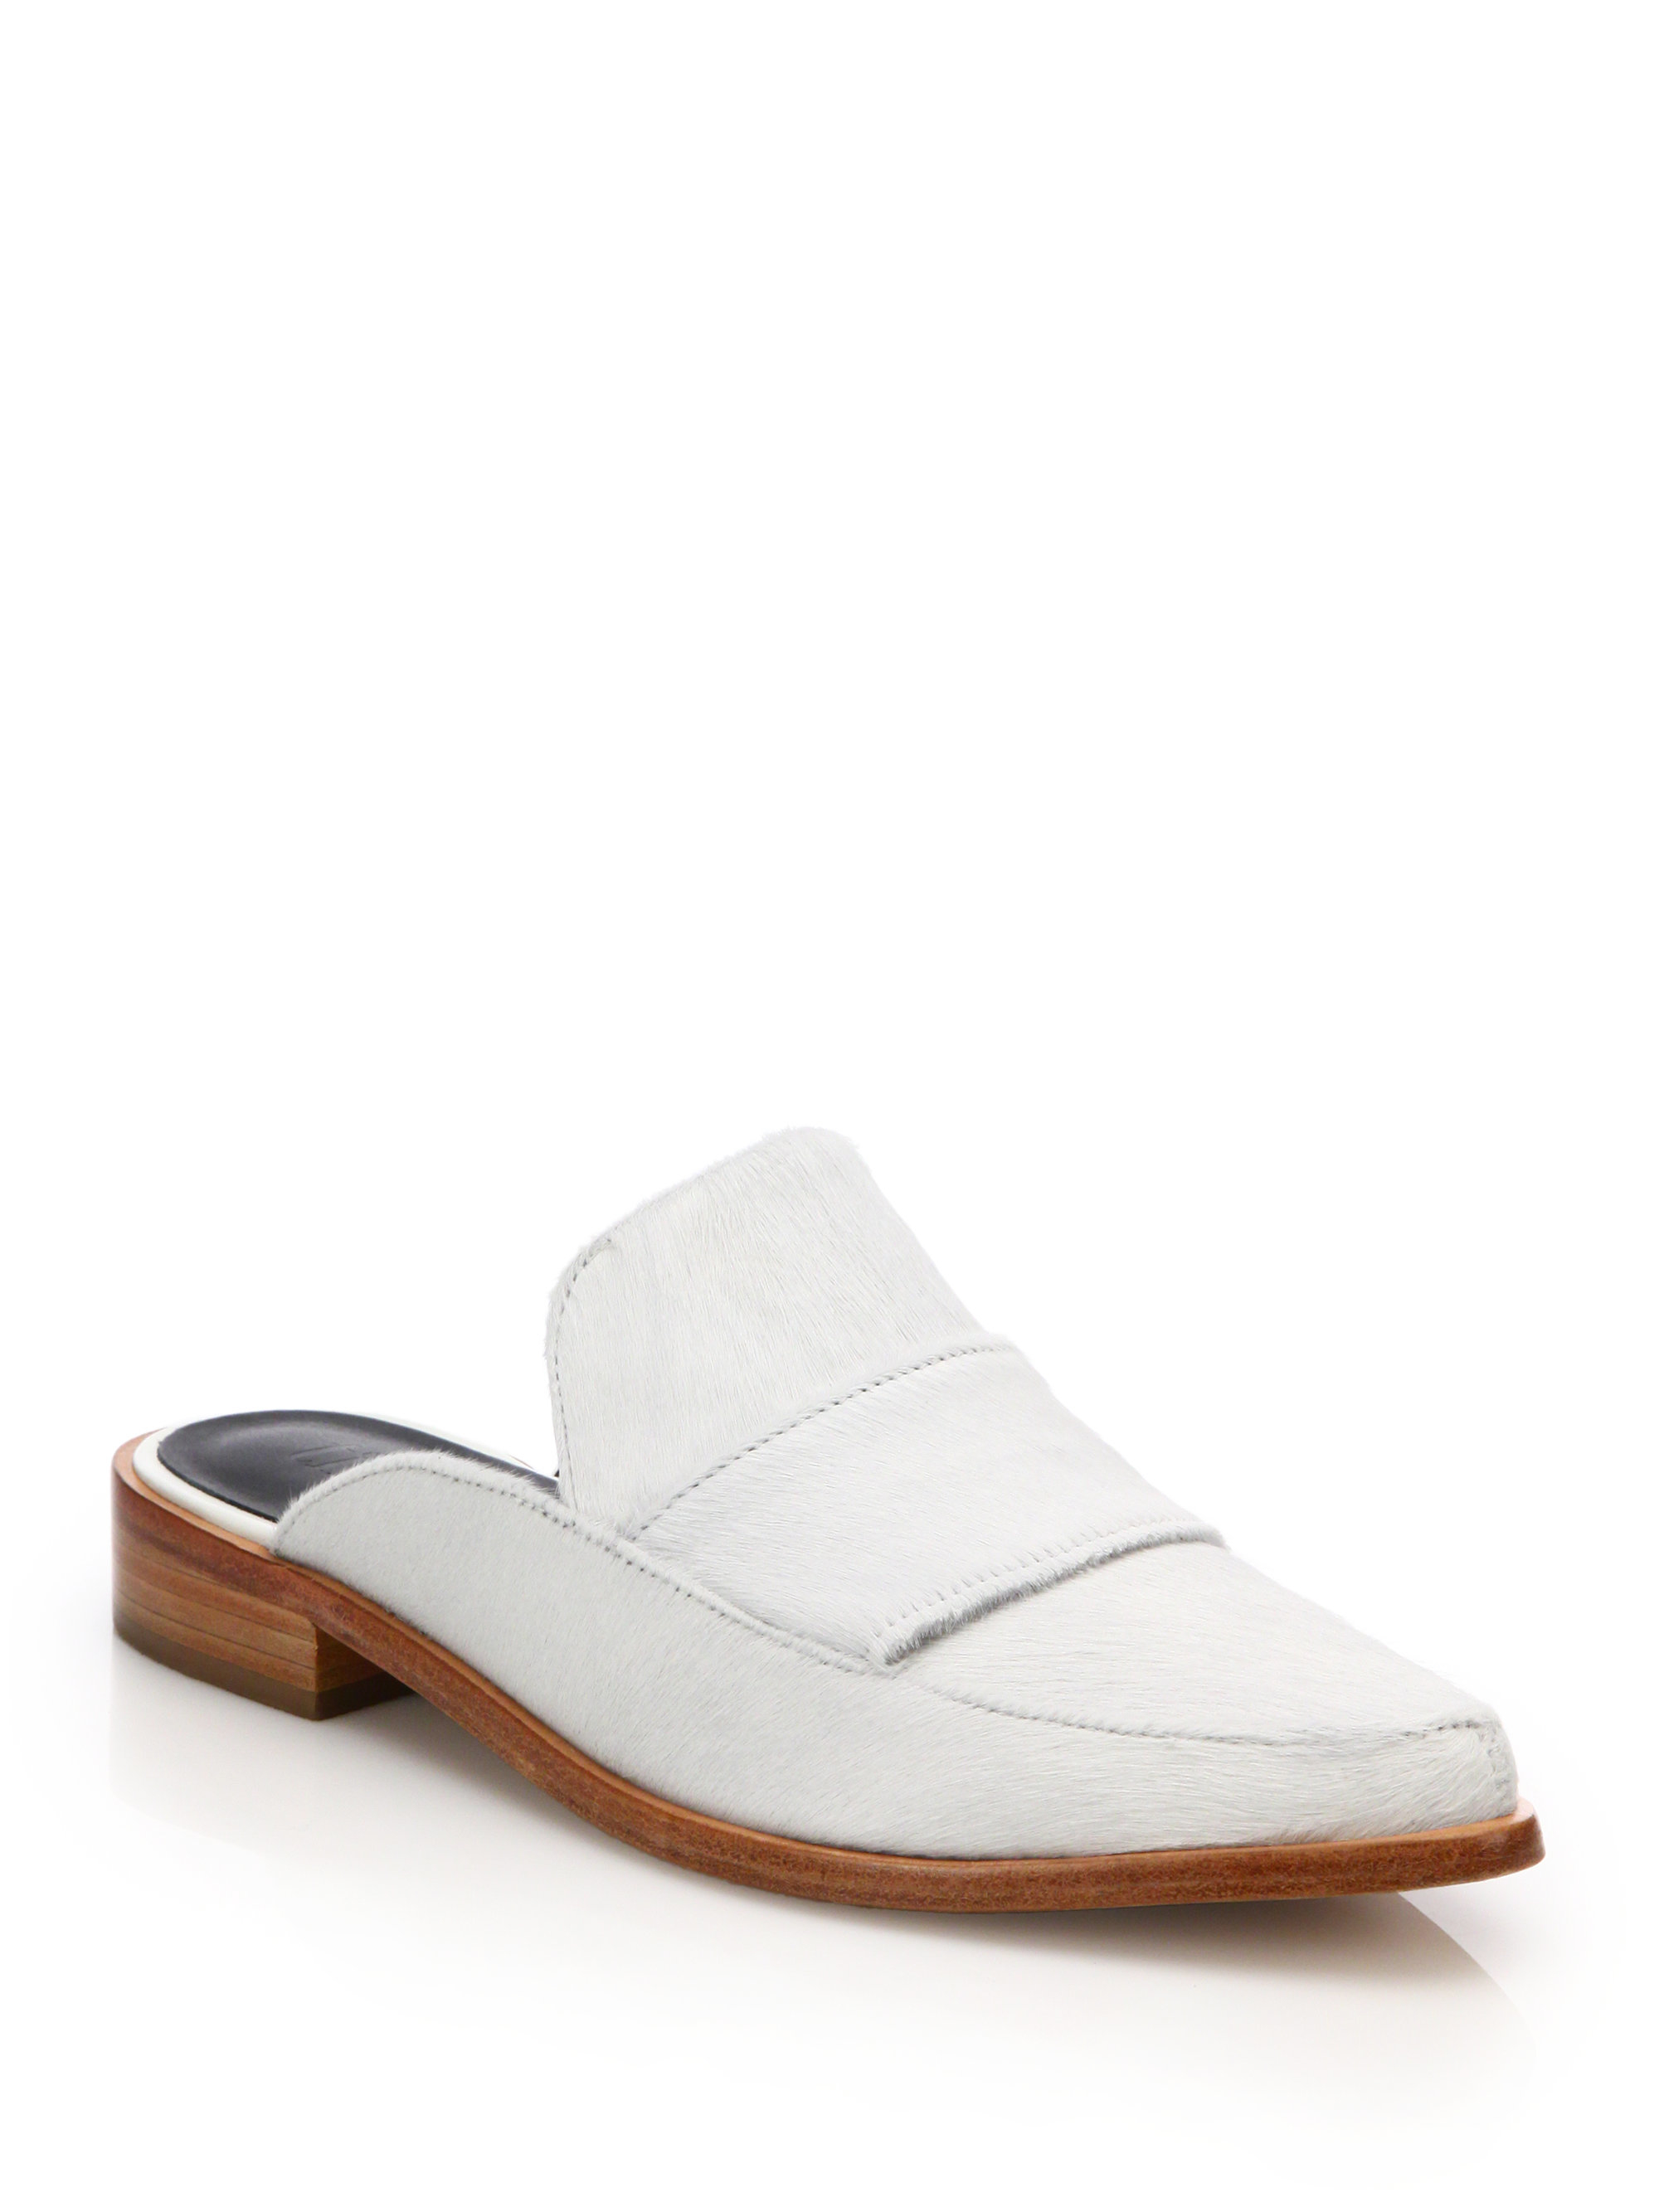 Lyst - Tibi Denni Calf Hair Mule Loafers in White